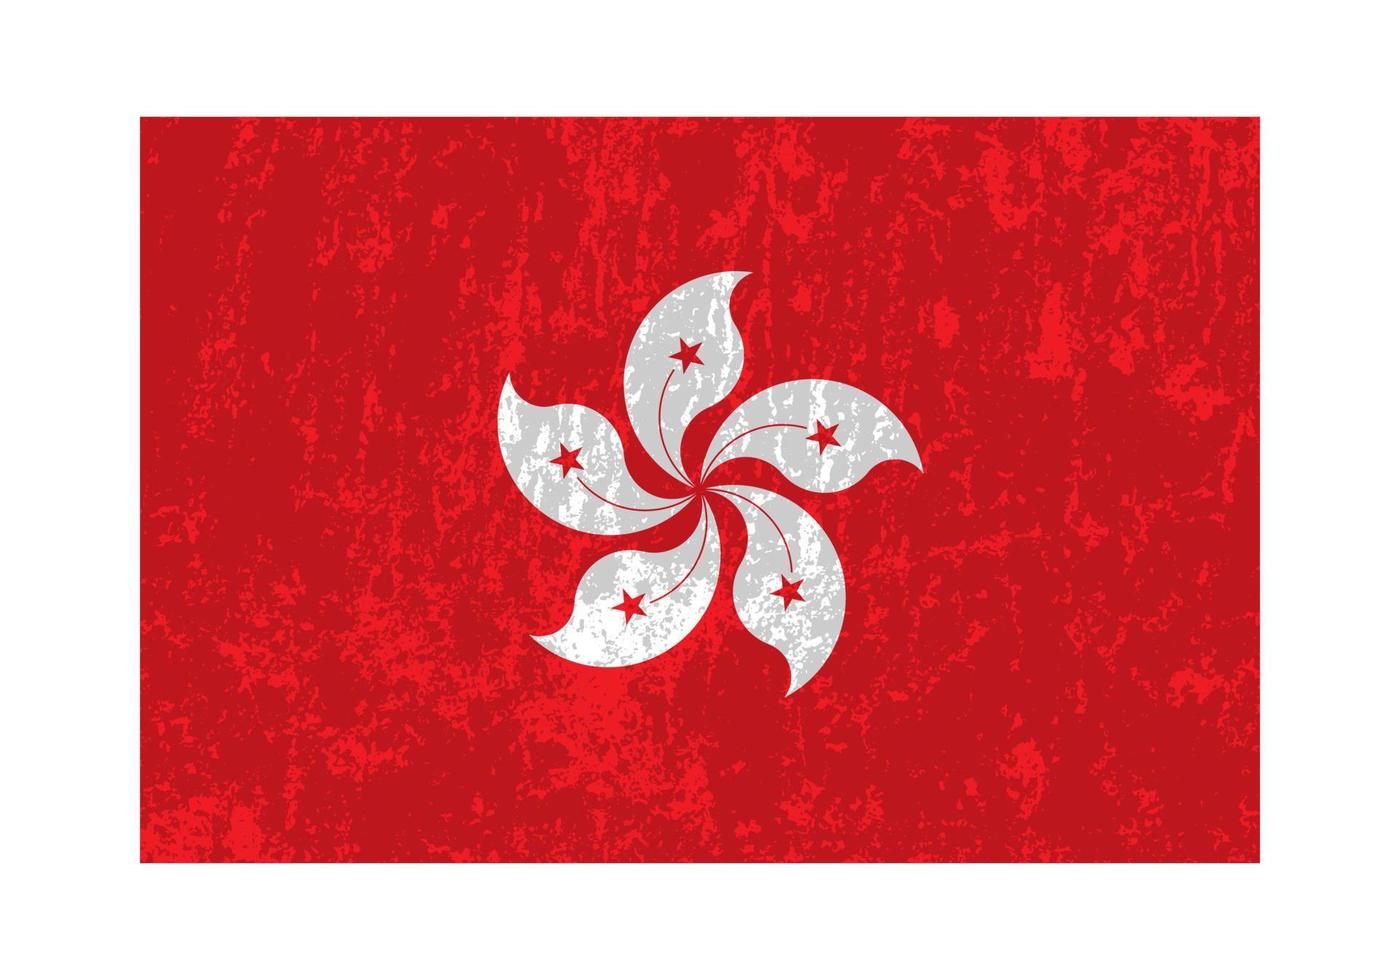 Hongkong-Grunge-Flagge, offizielle Farben und Proportionen. Vektor-Illustration. vektor